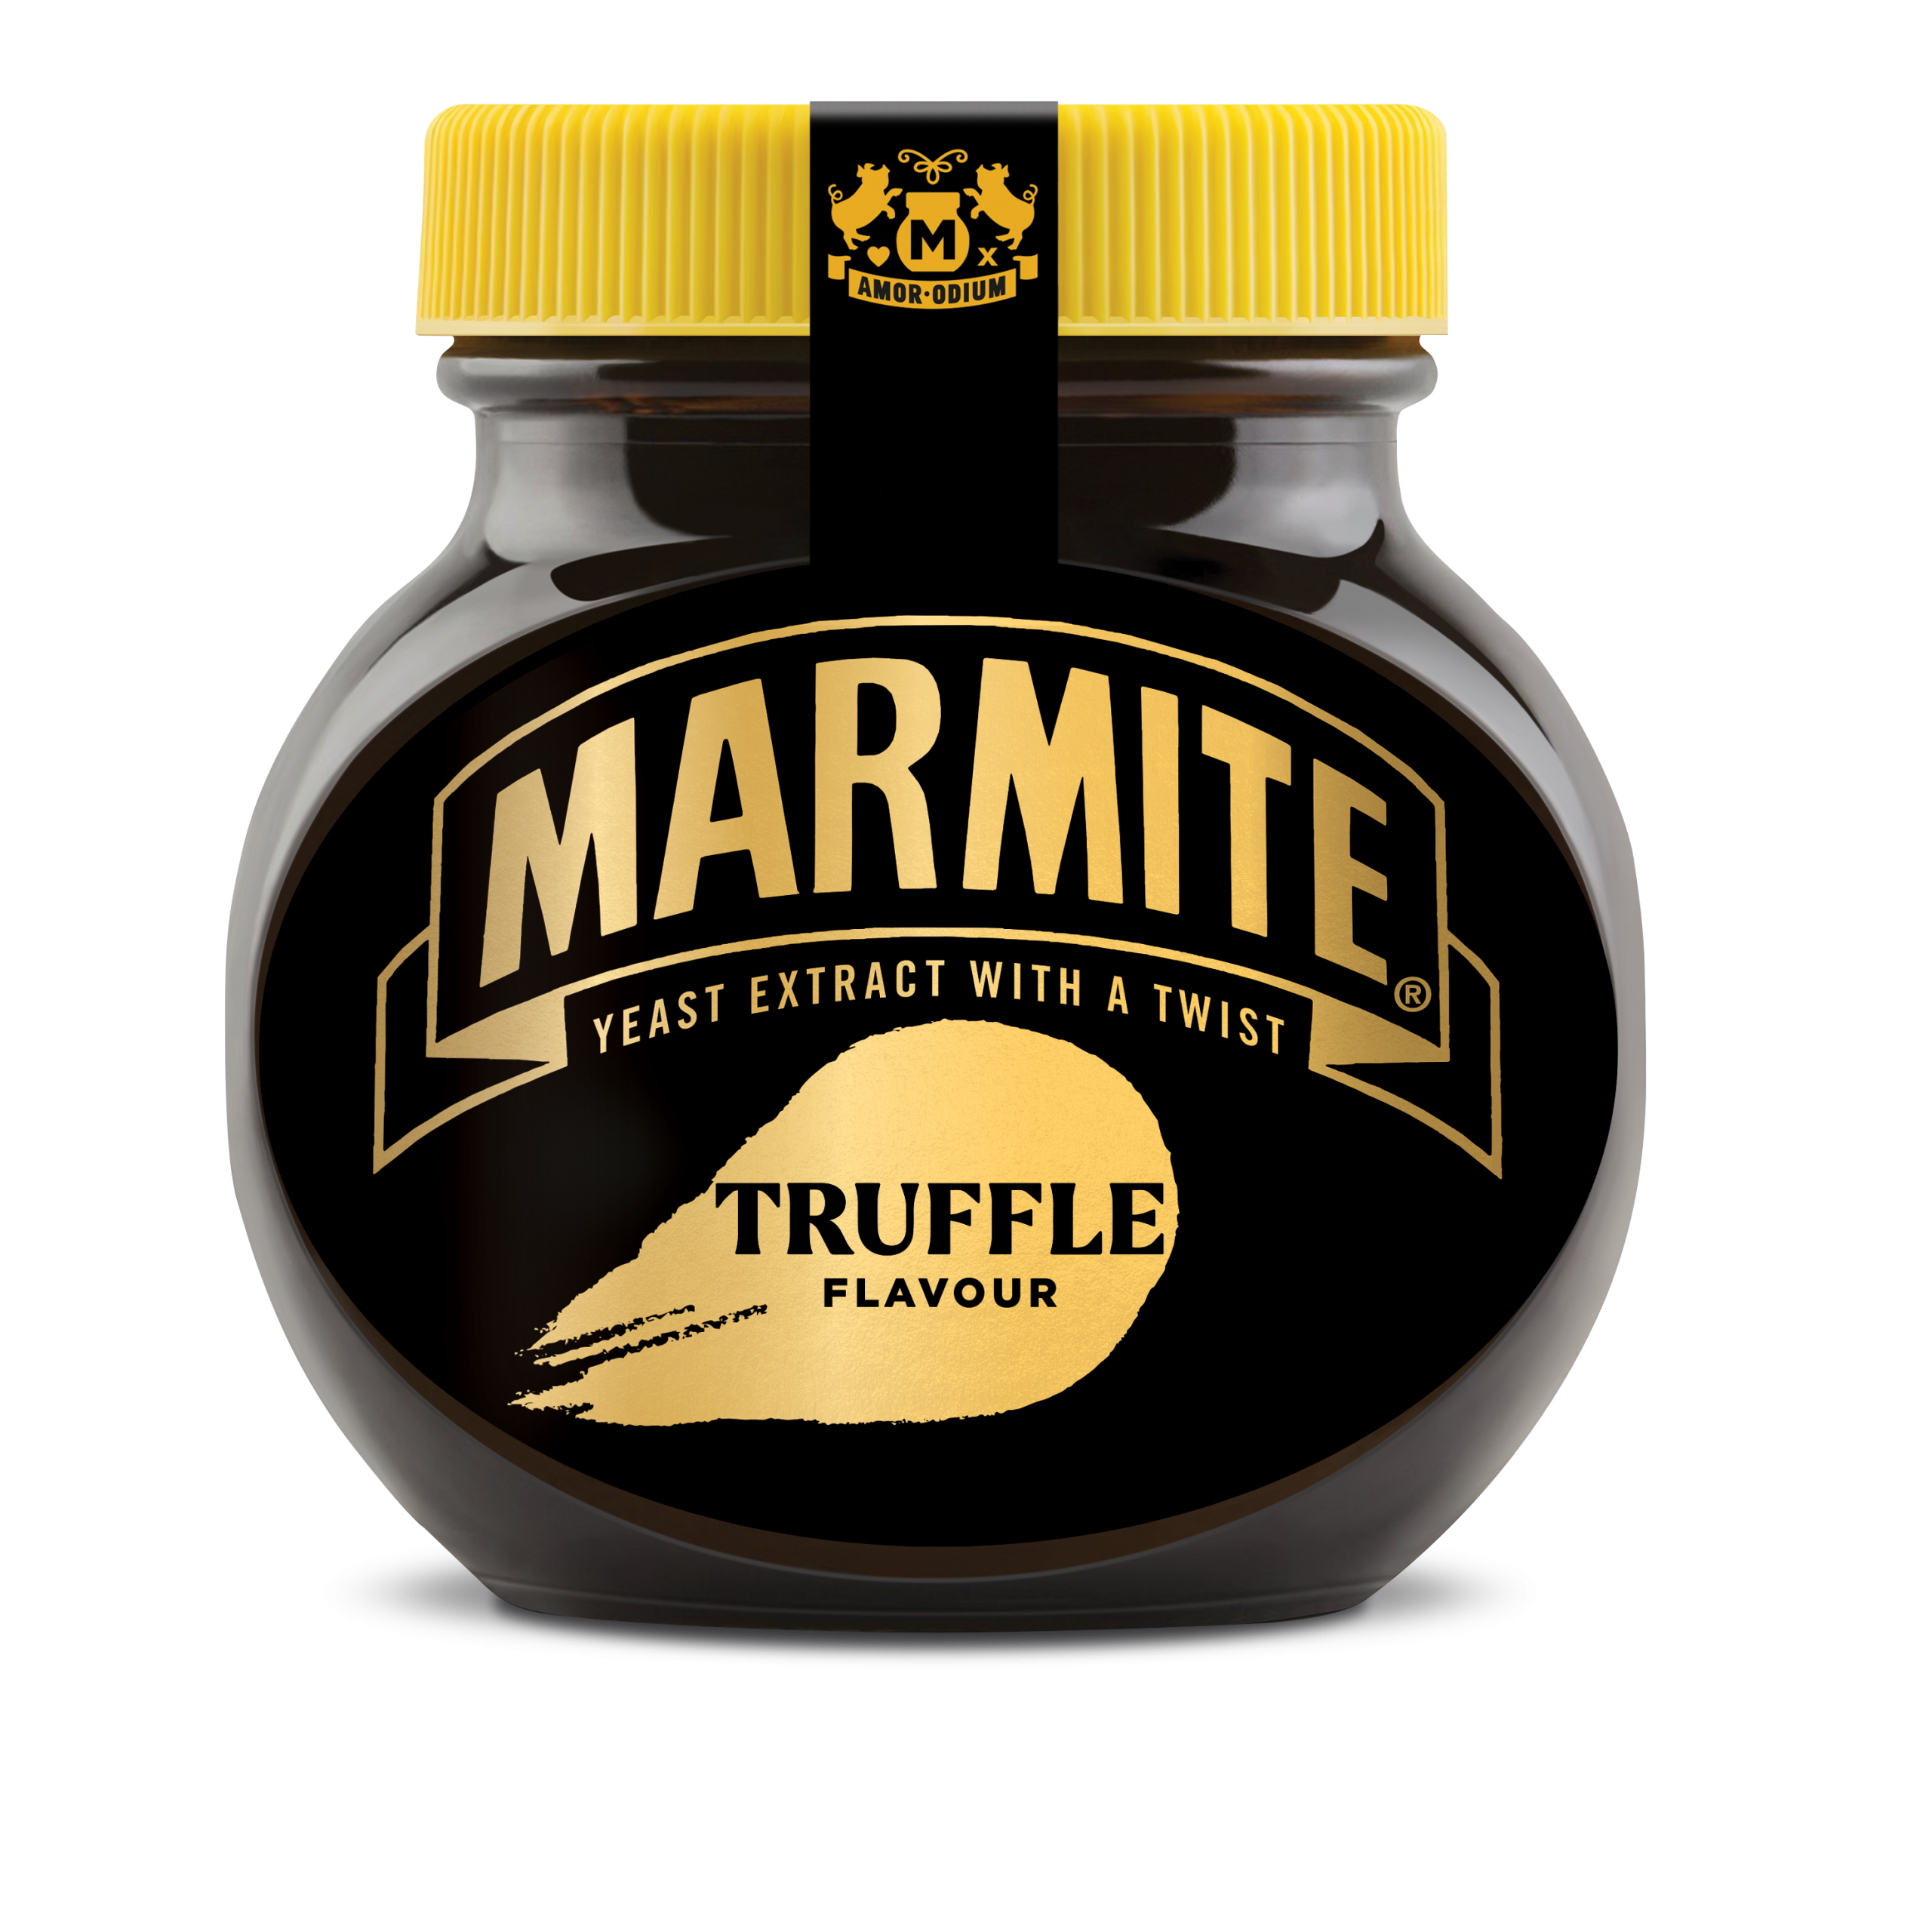 Marmite launches ‘poshest’ product  – Marmite Truffle flavour